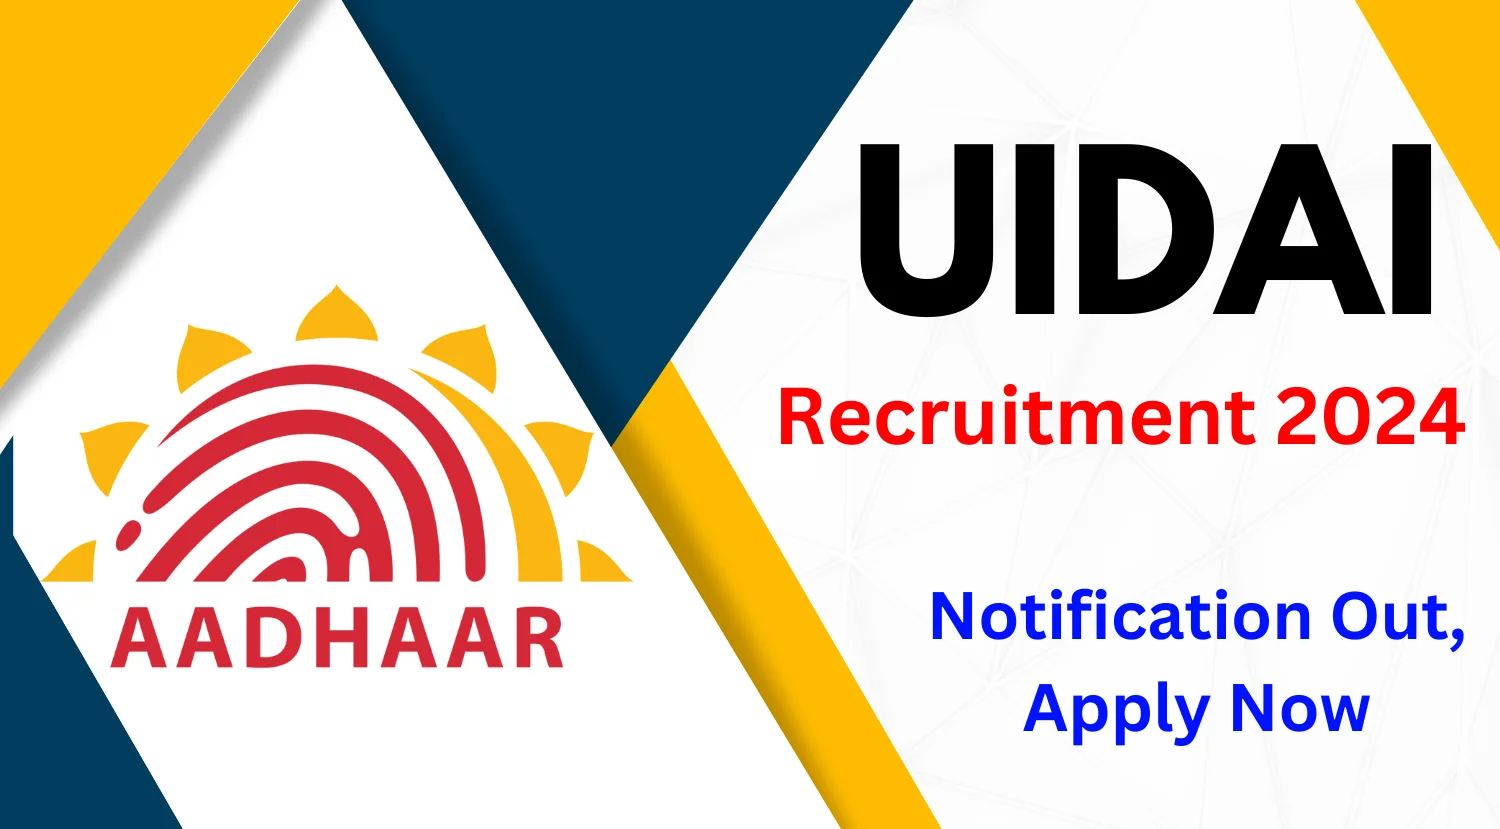 UIDAI Recruitment 2024 Notification Out